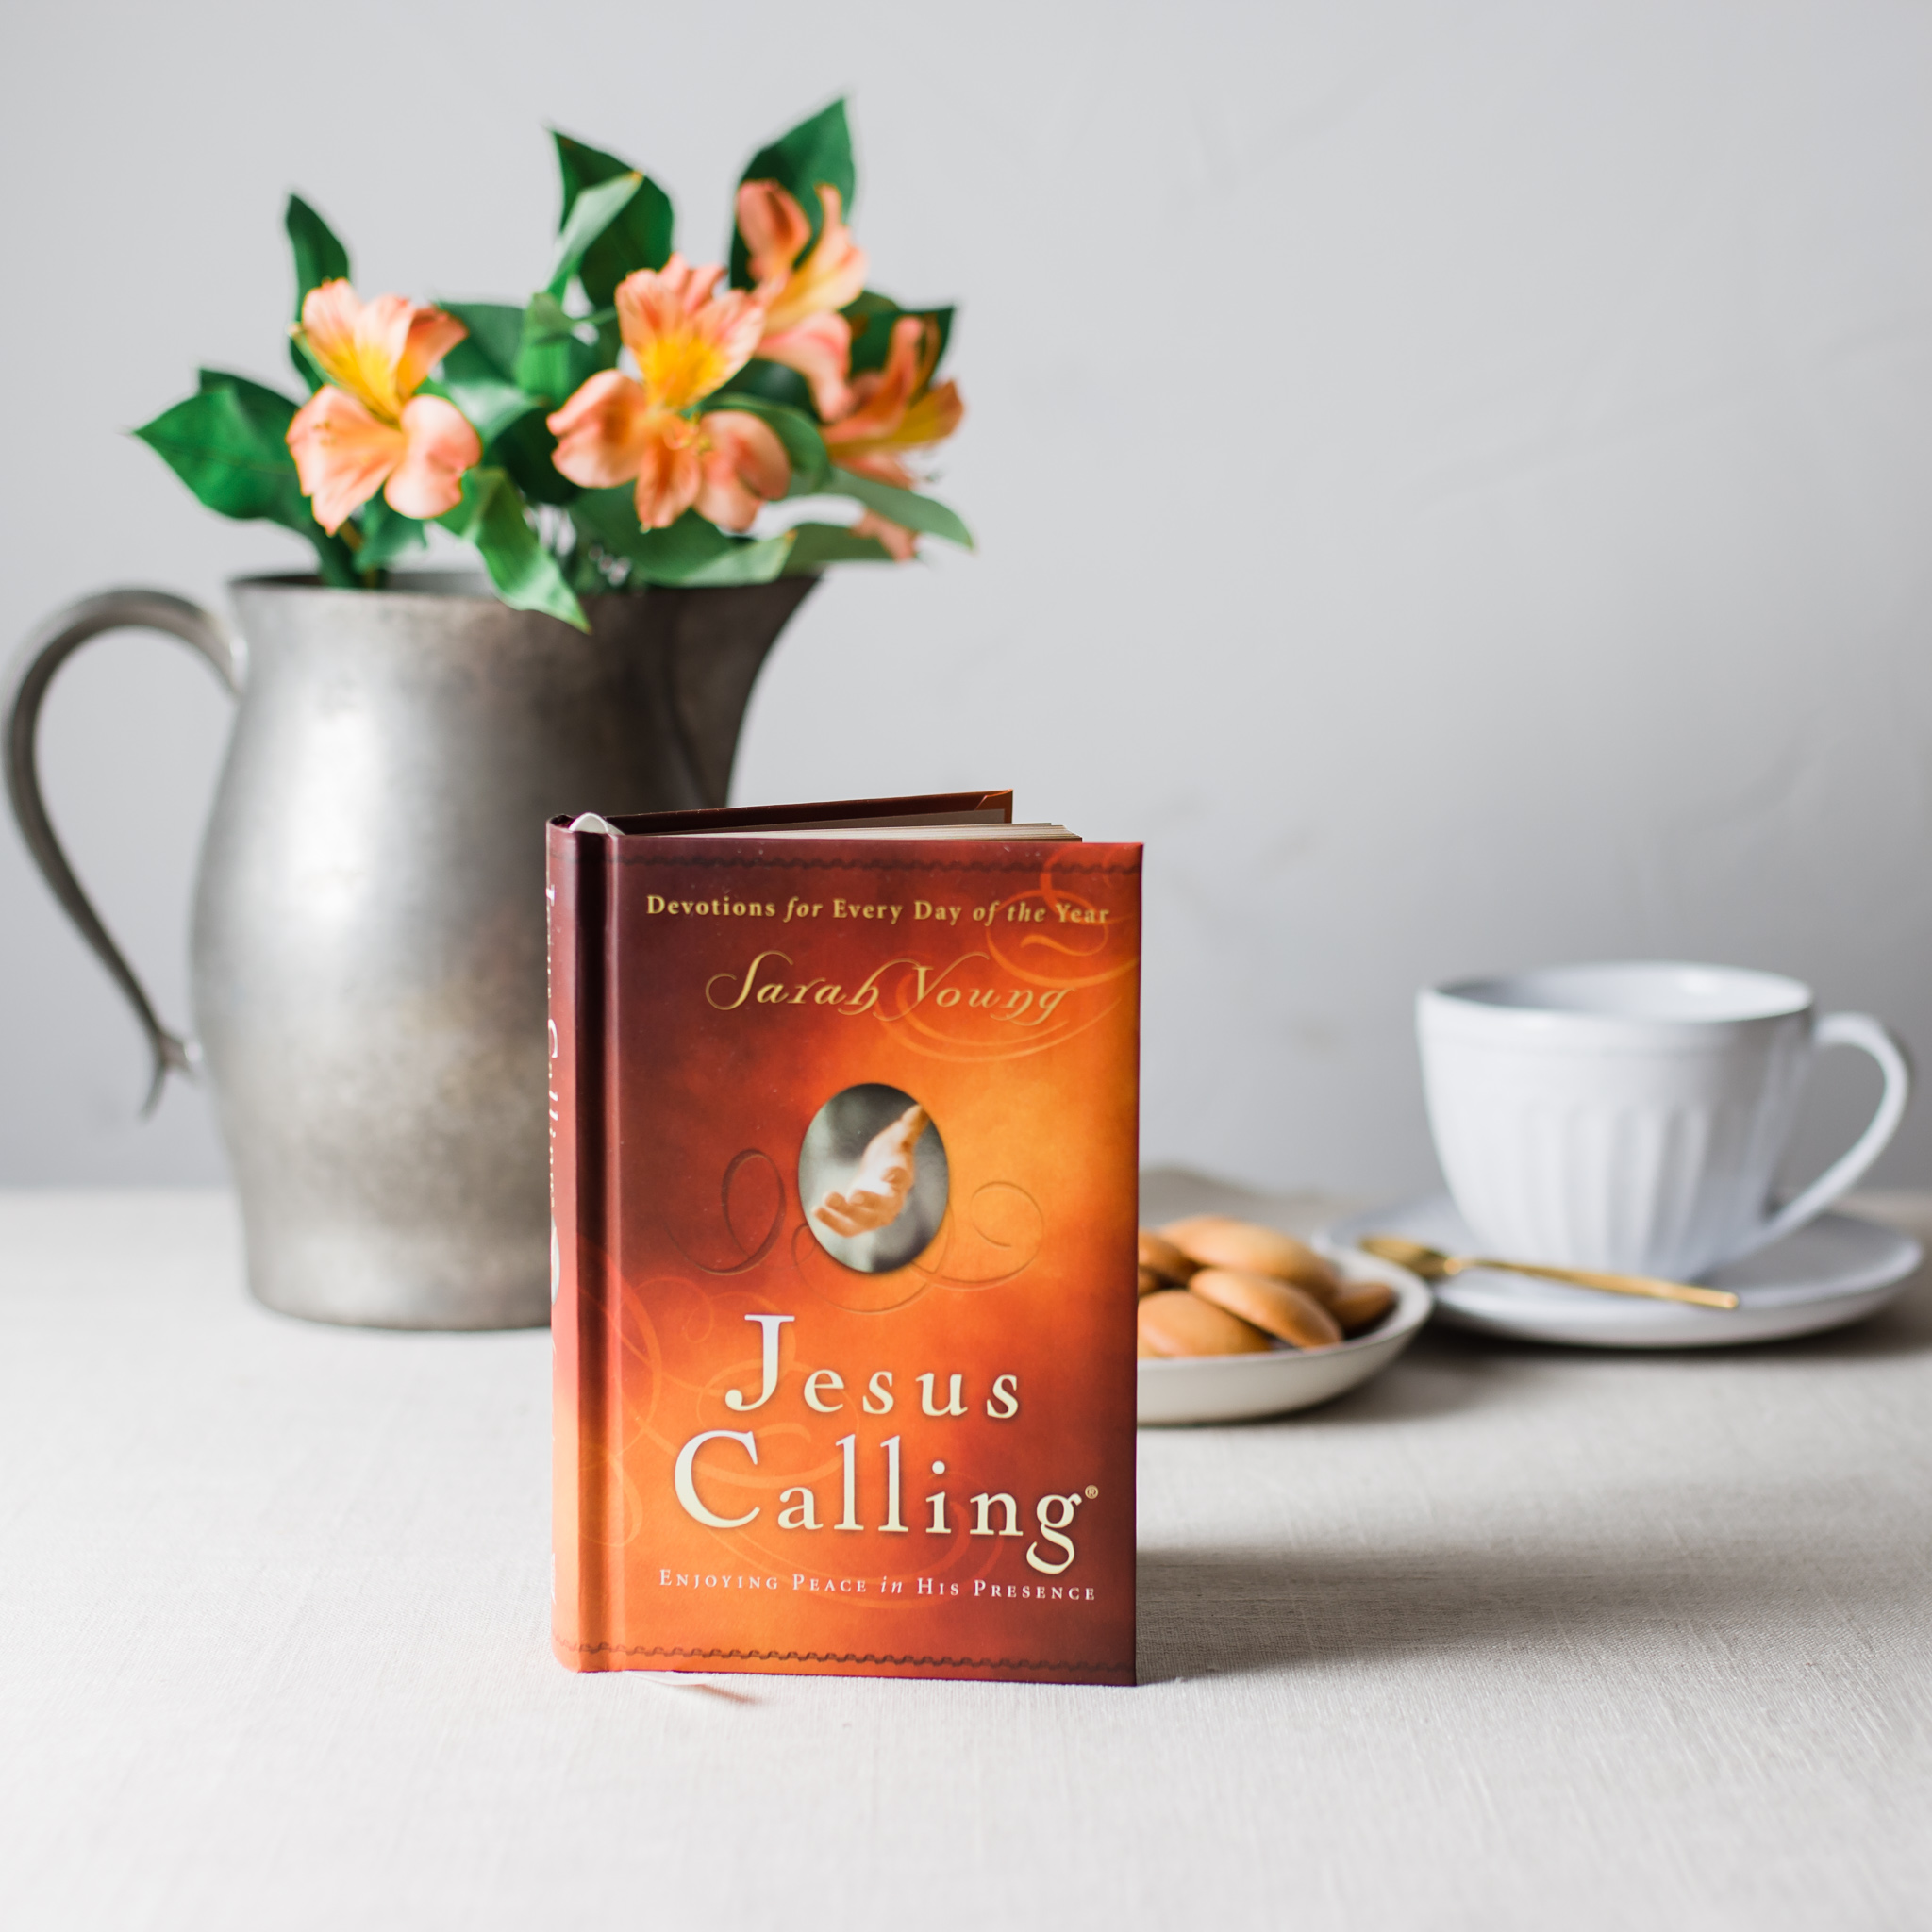 Sarah Young's bestselling book Jesus Calling